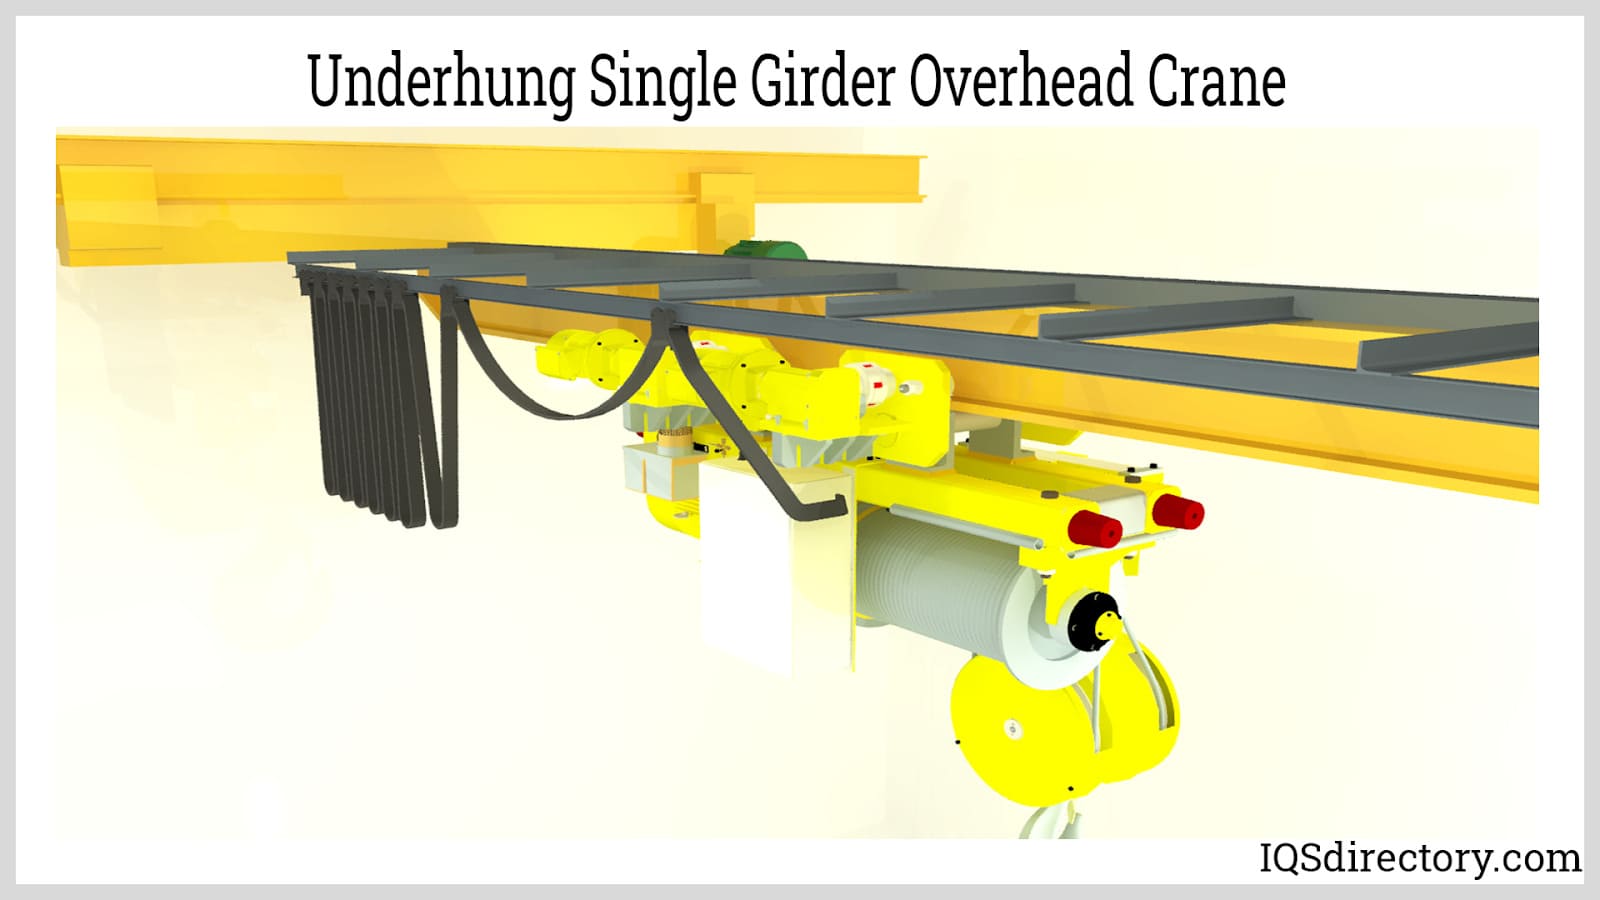 Underhung Single Girder Overhead Crane